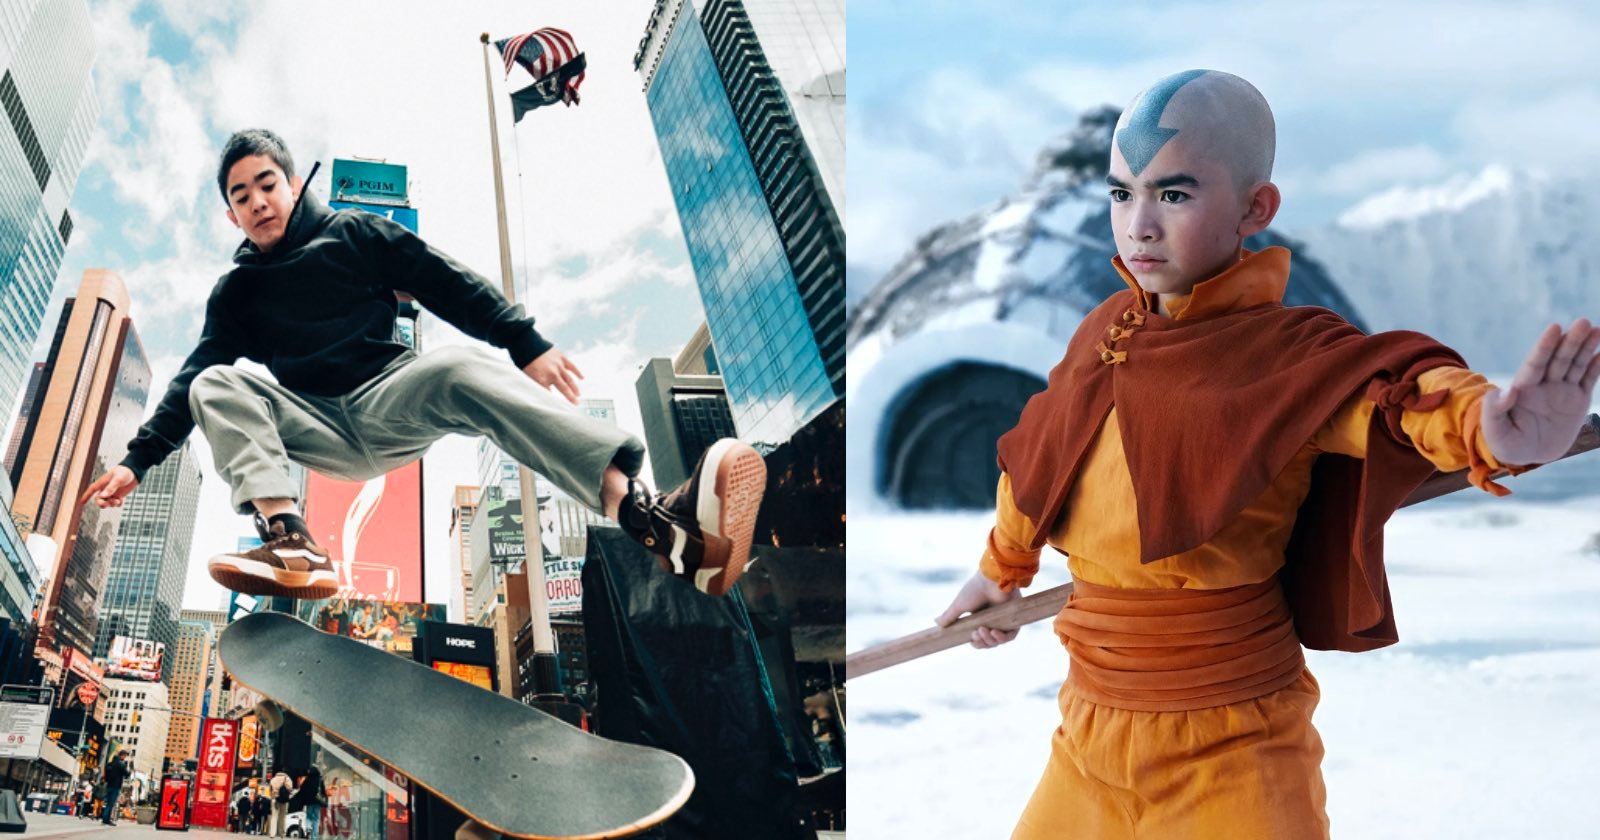 Street Photographer Takes Impromptu Portrait of Avatar: The Last Airbender Actor